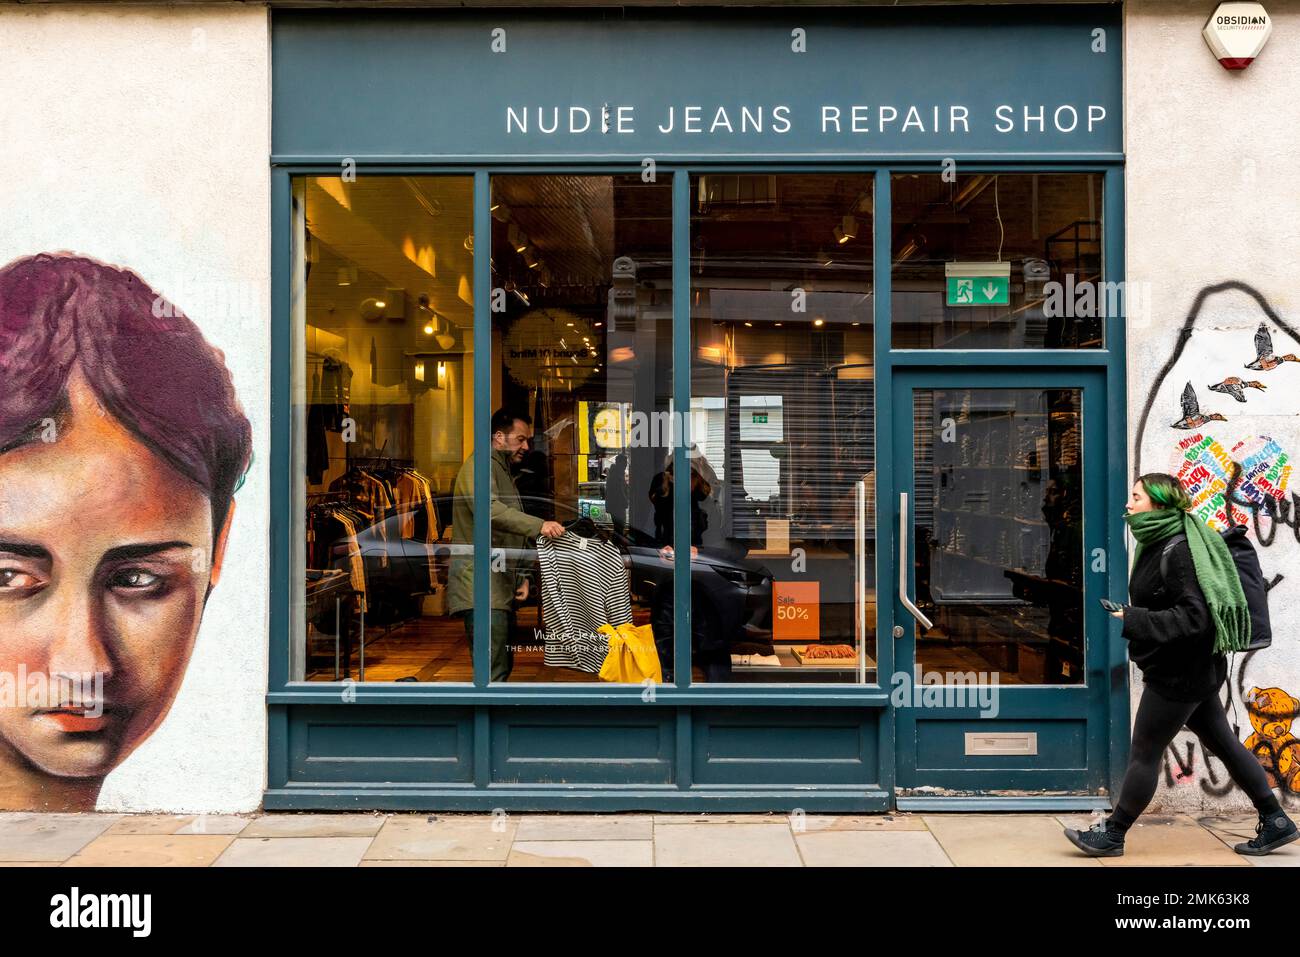 The Nudie Jeans Repair Shop, Shoreditch, London, UK Stock Photo - Alamy